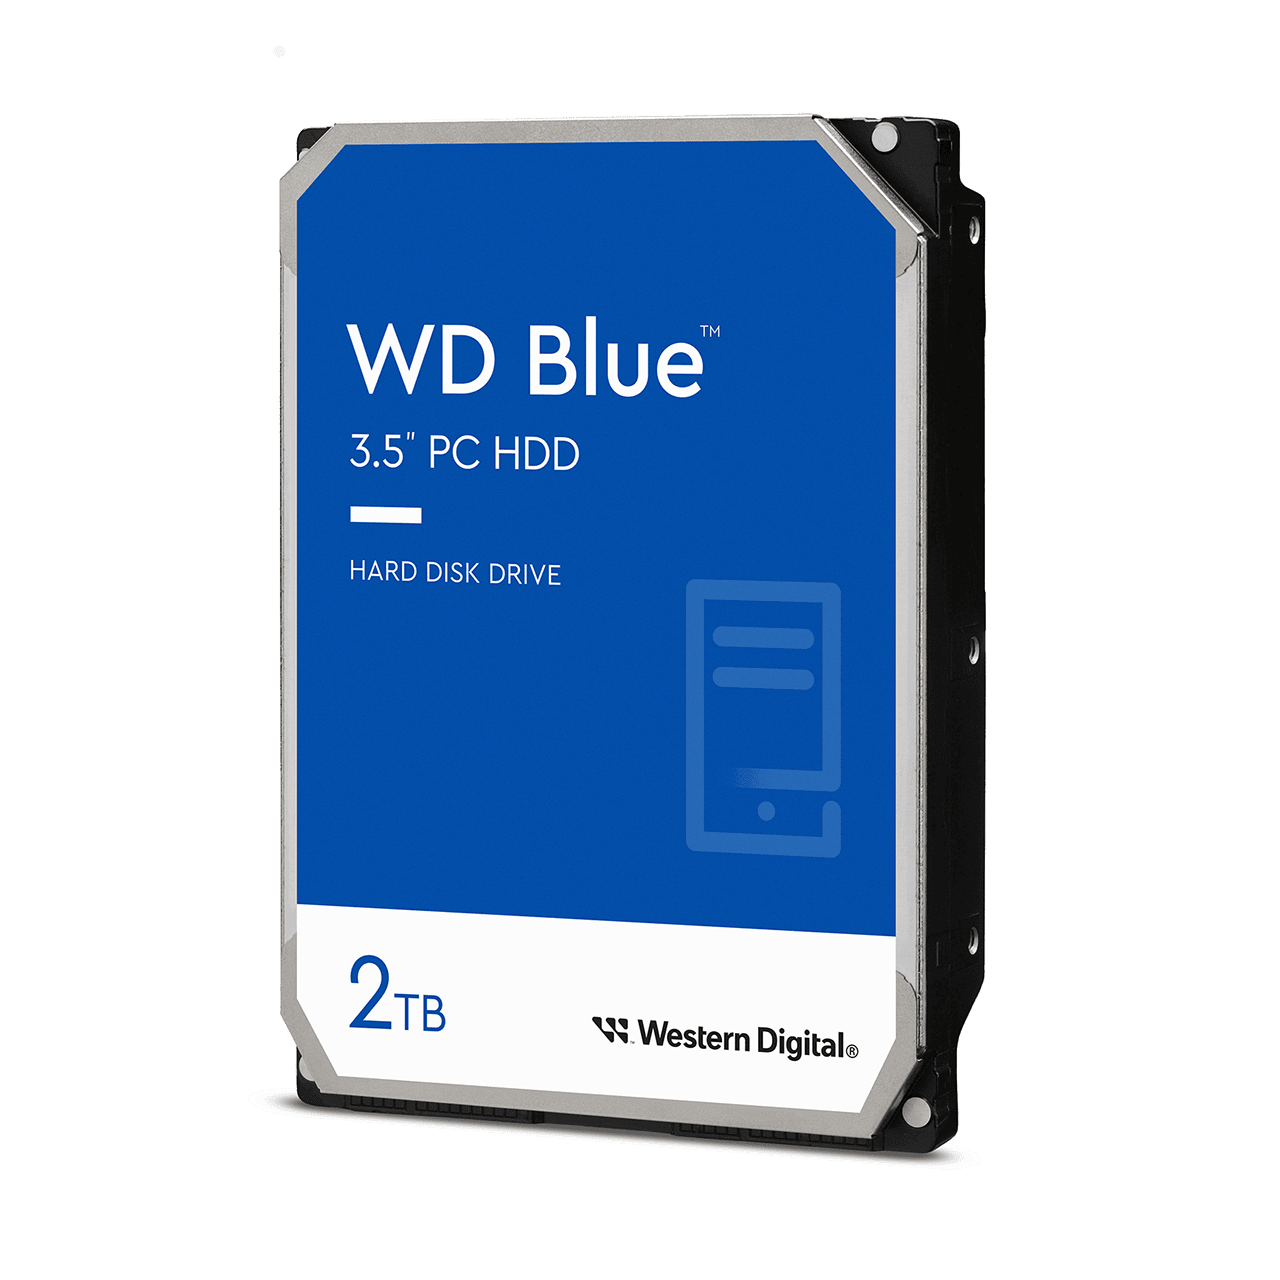 WD Blue 3.5in PC Hard Drive -2TB - Image5